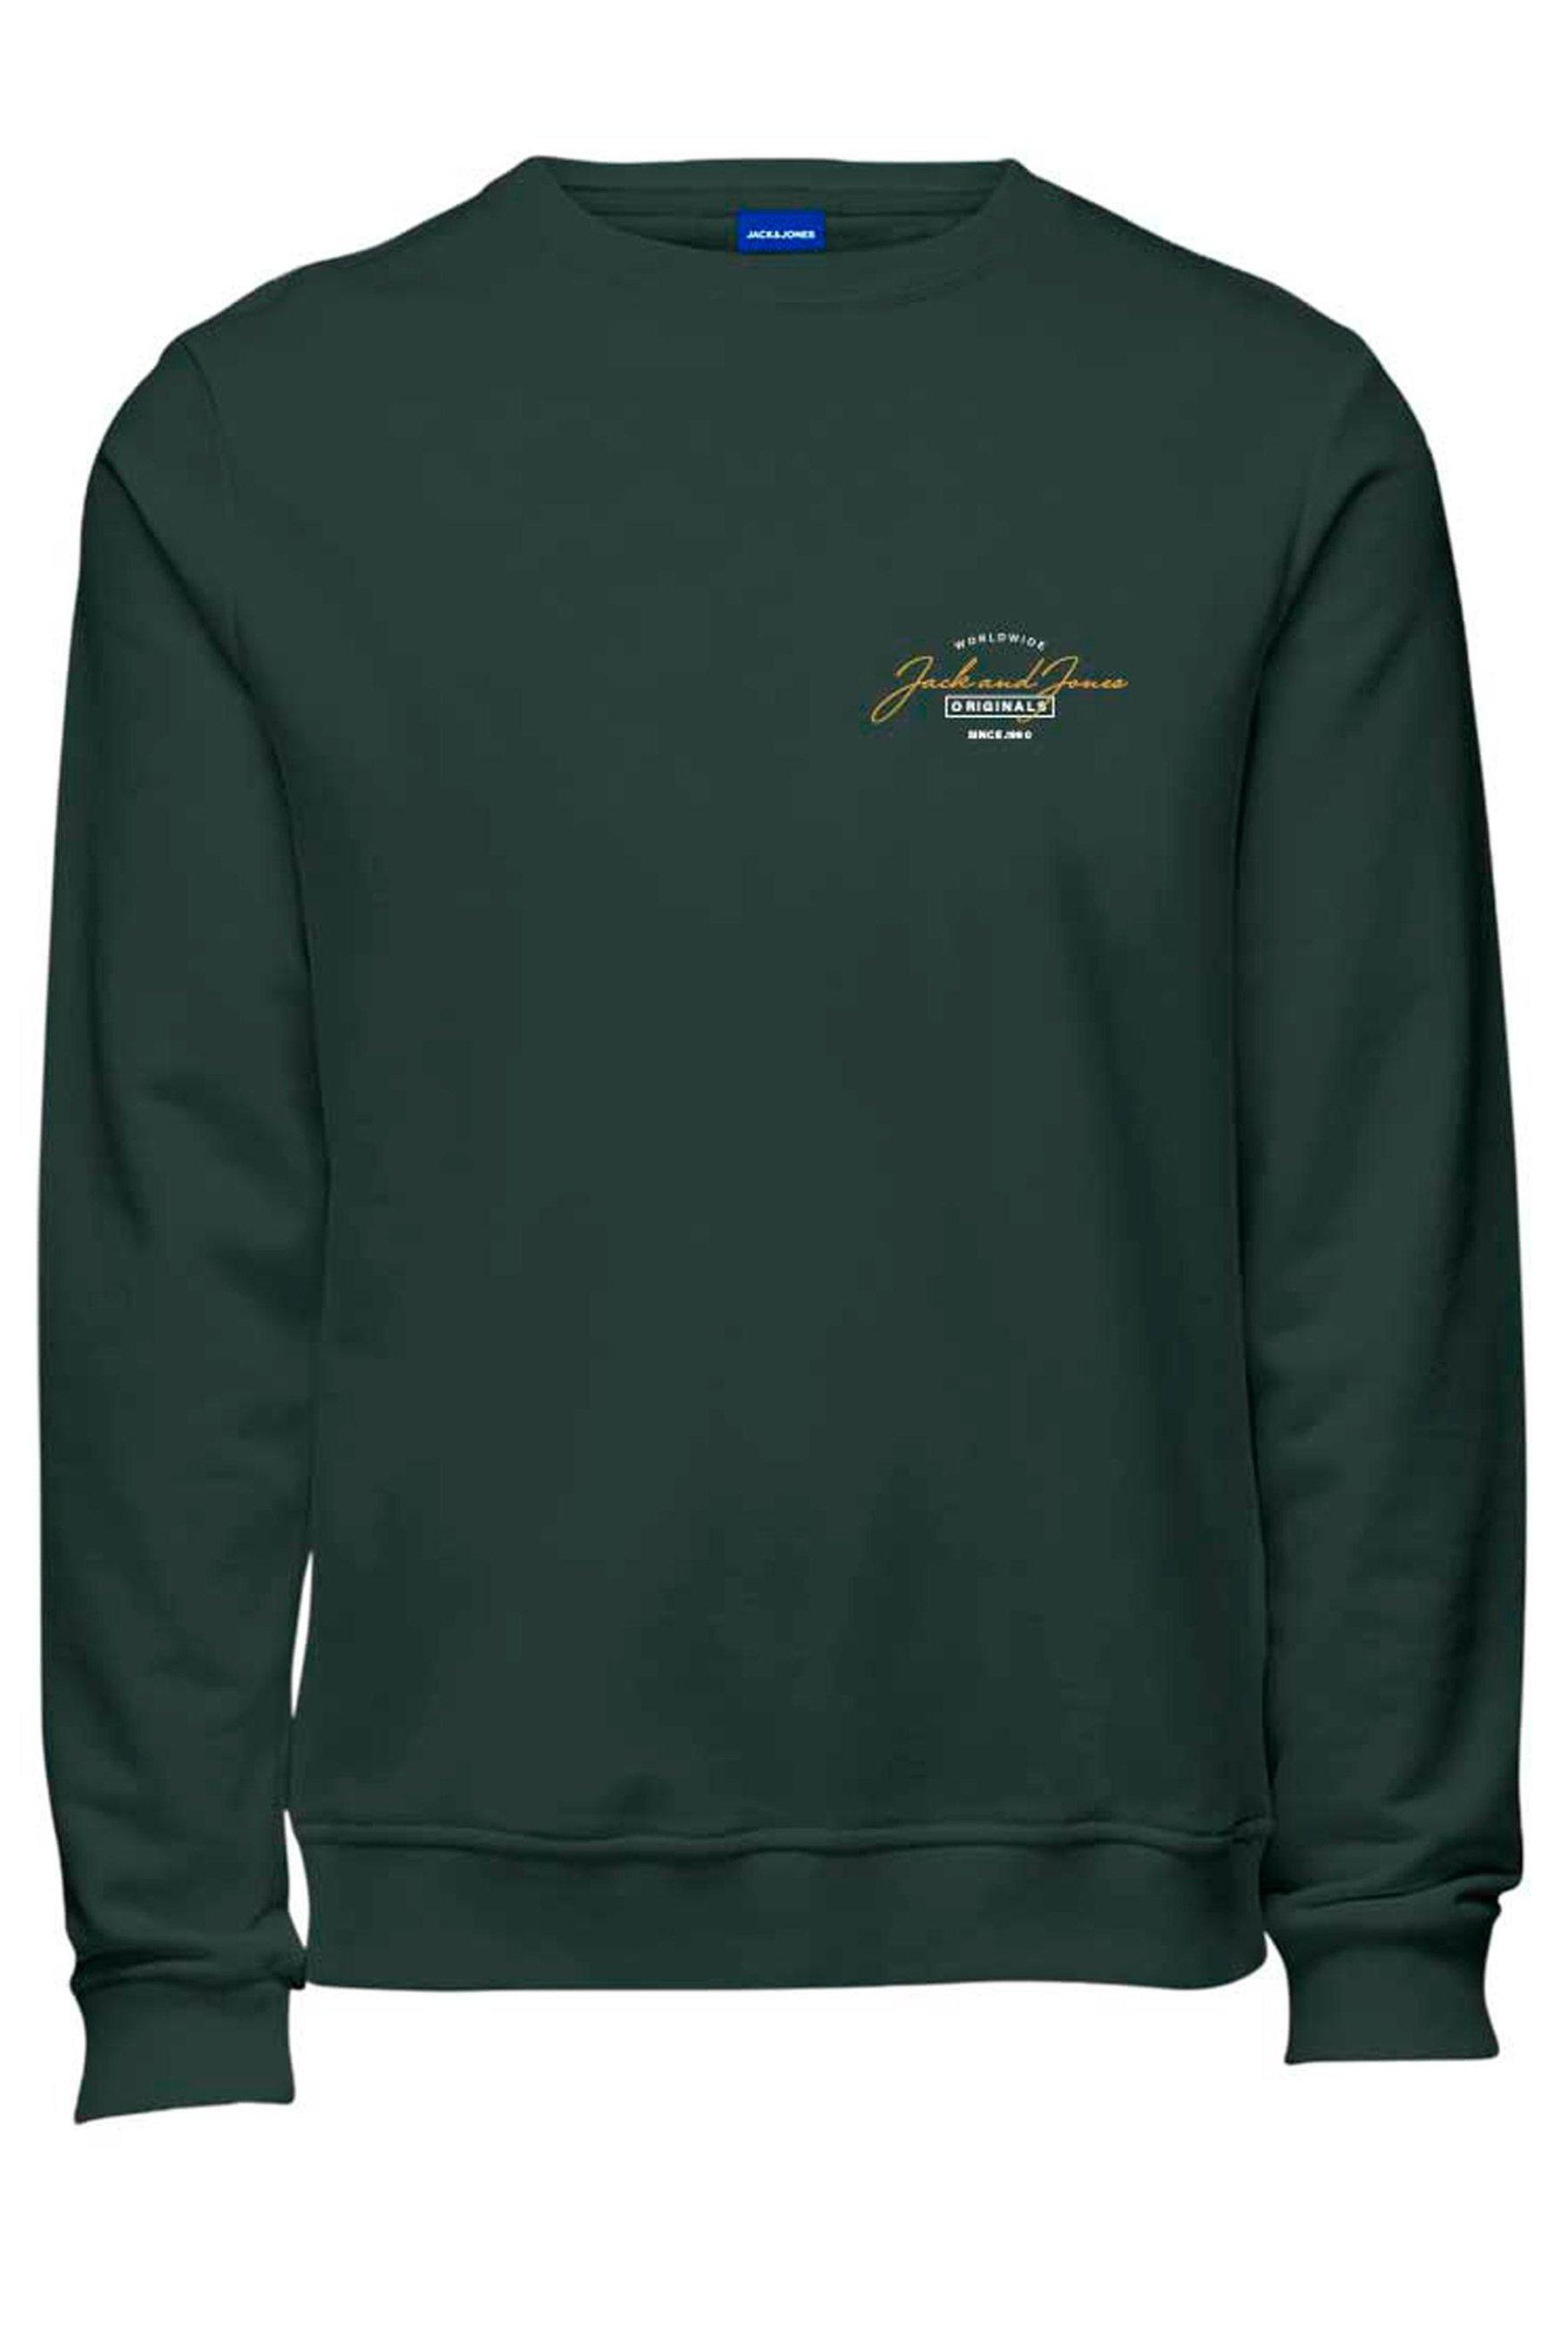 jack and jones ferry crew neck khaki sweatshirt - mens - green - size: small